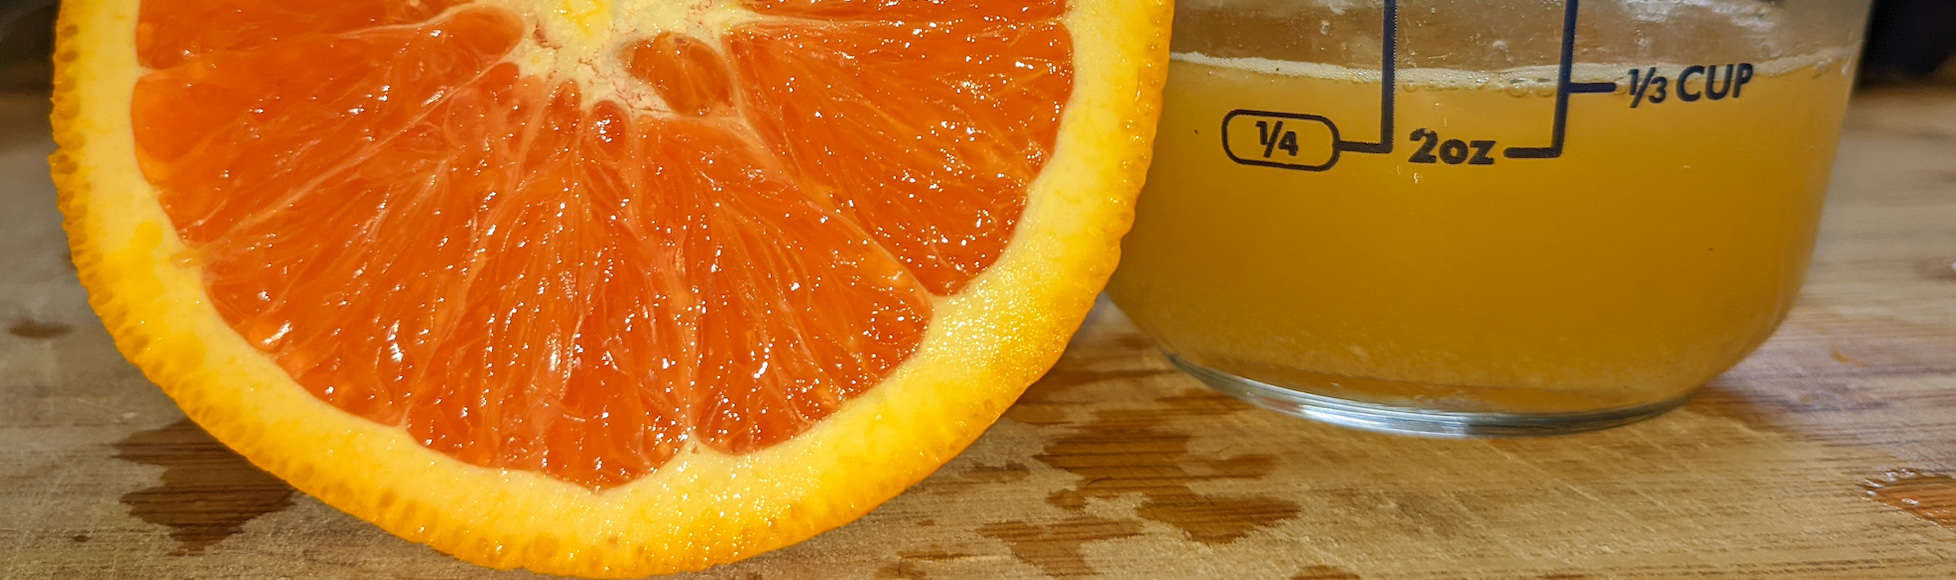 close up of cut orange next to orange juice in measuring cup